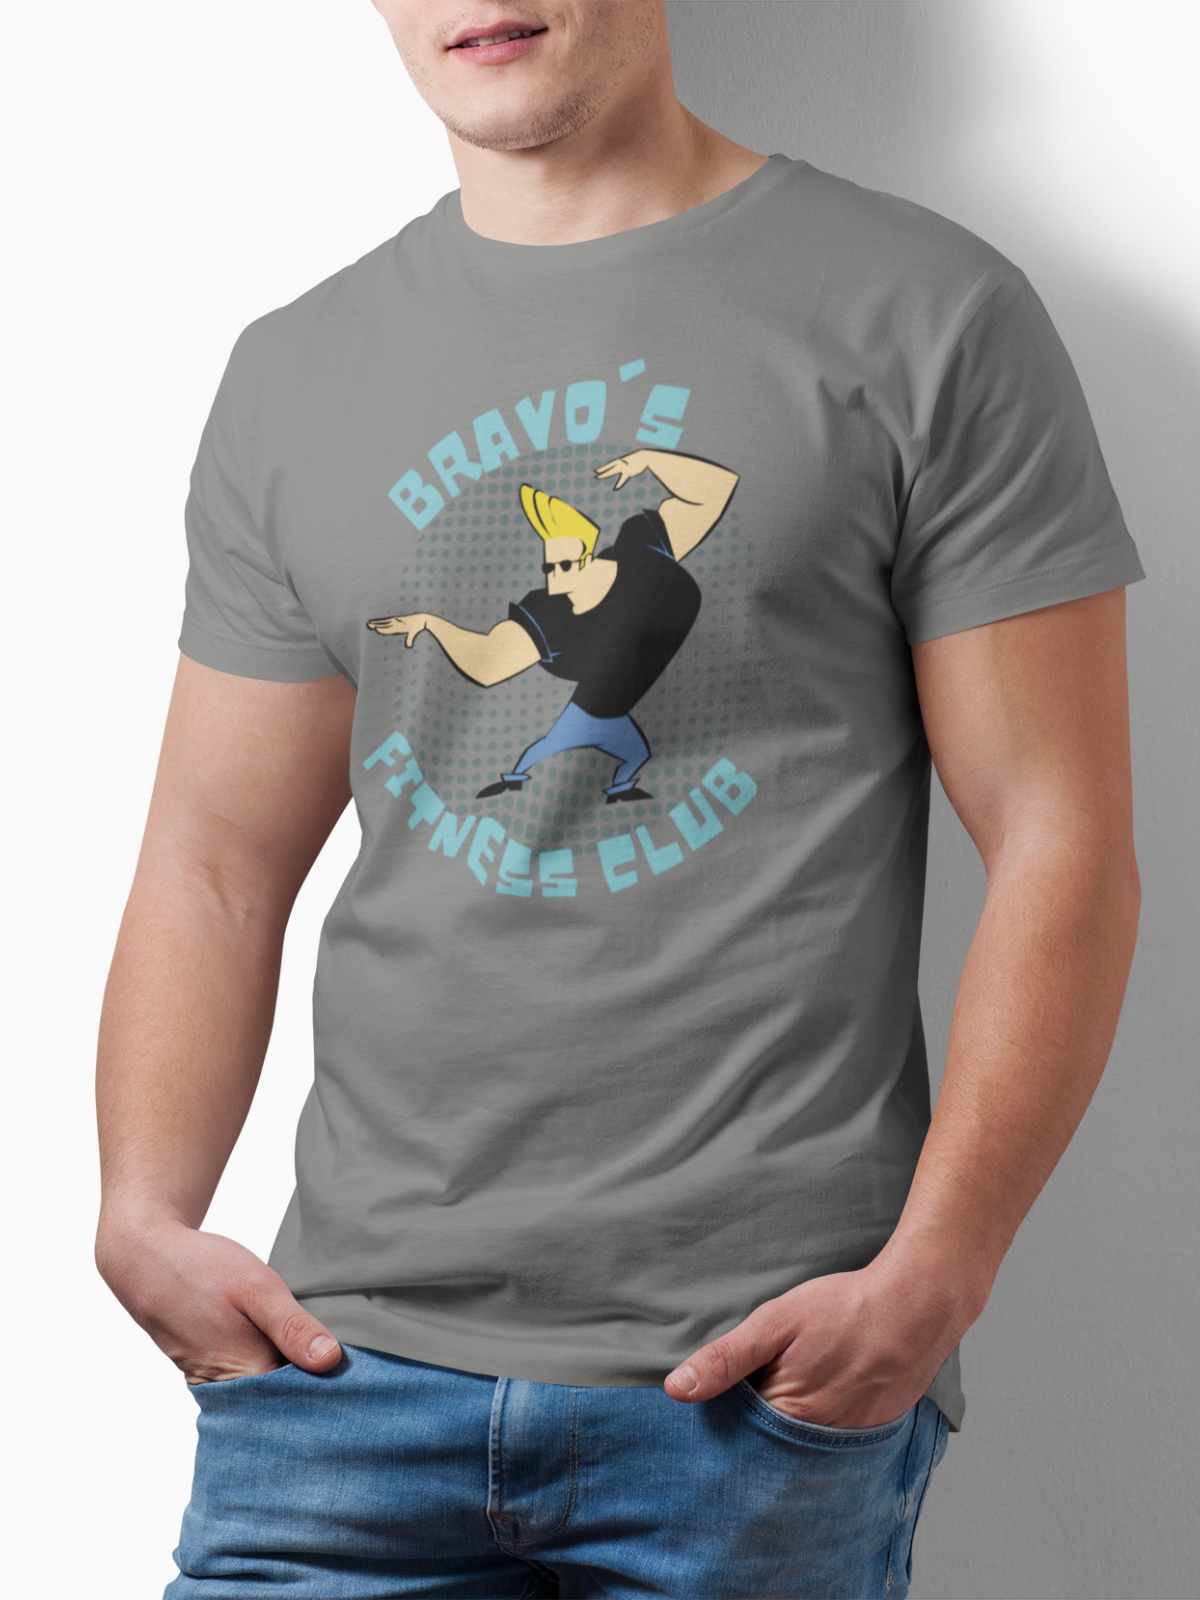 Bravo's Fitness Club: Johnny Bravo